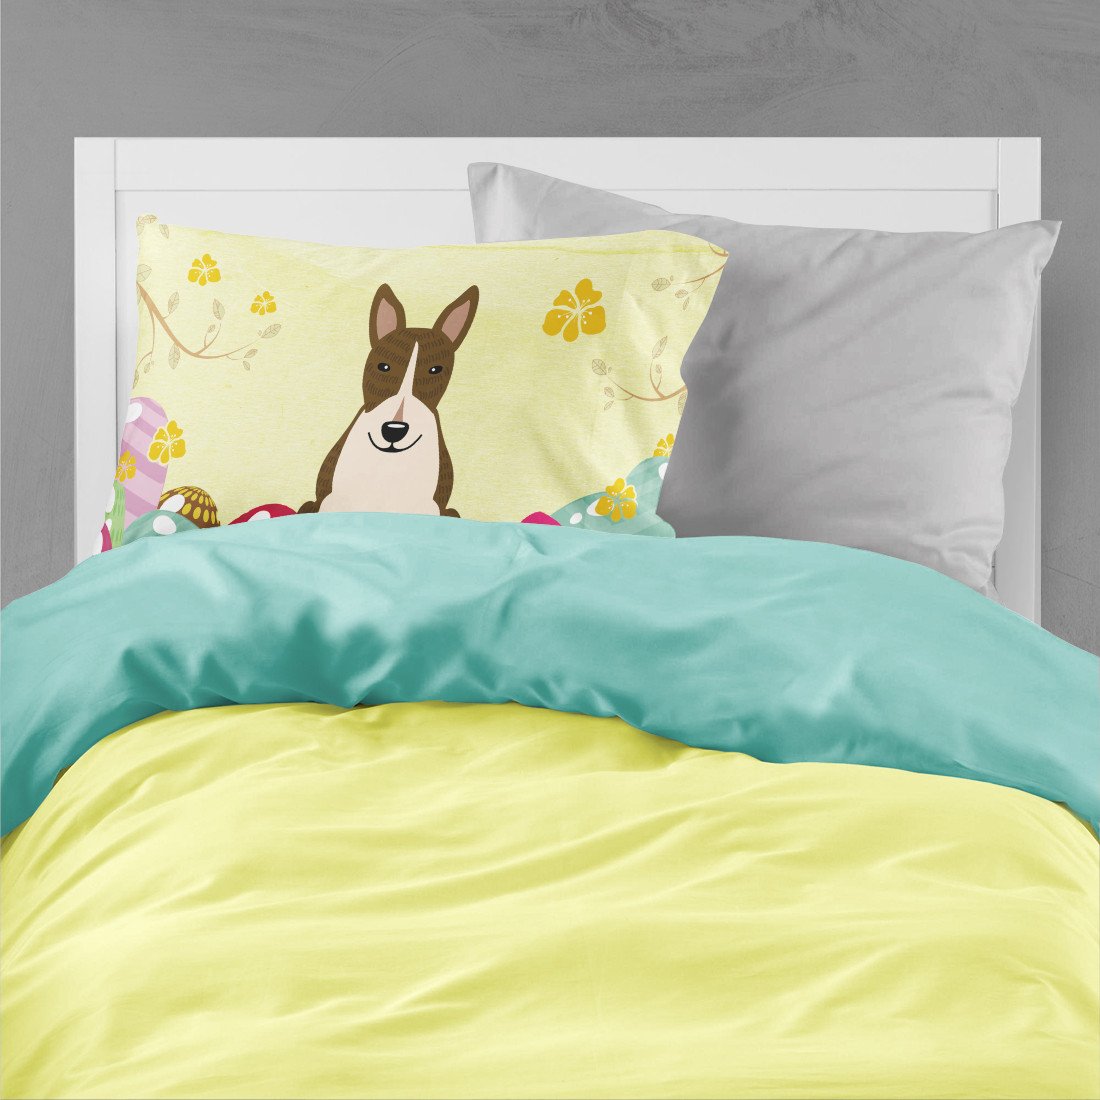 Easter Eggs Bull Terrier Dark Brindle Fabric Standard Pillowcase BB6136PILLOWCASE by Caroline's Treasures